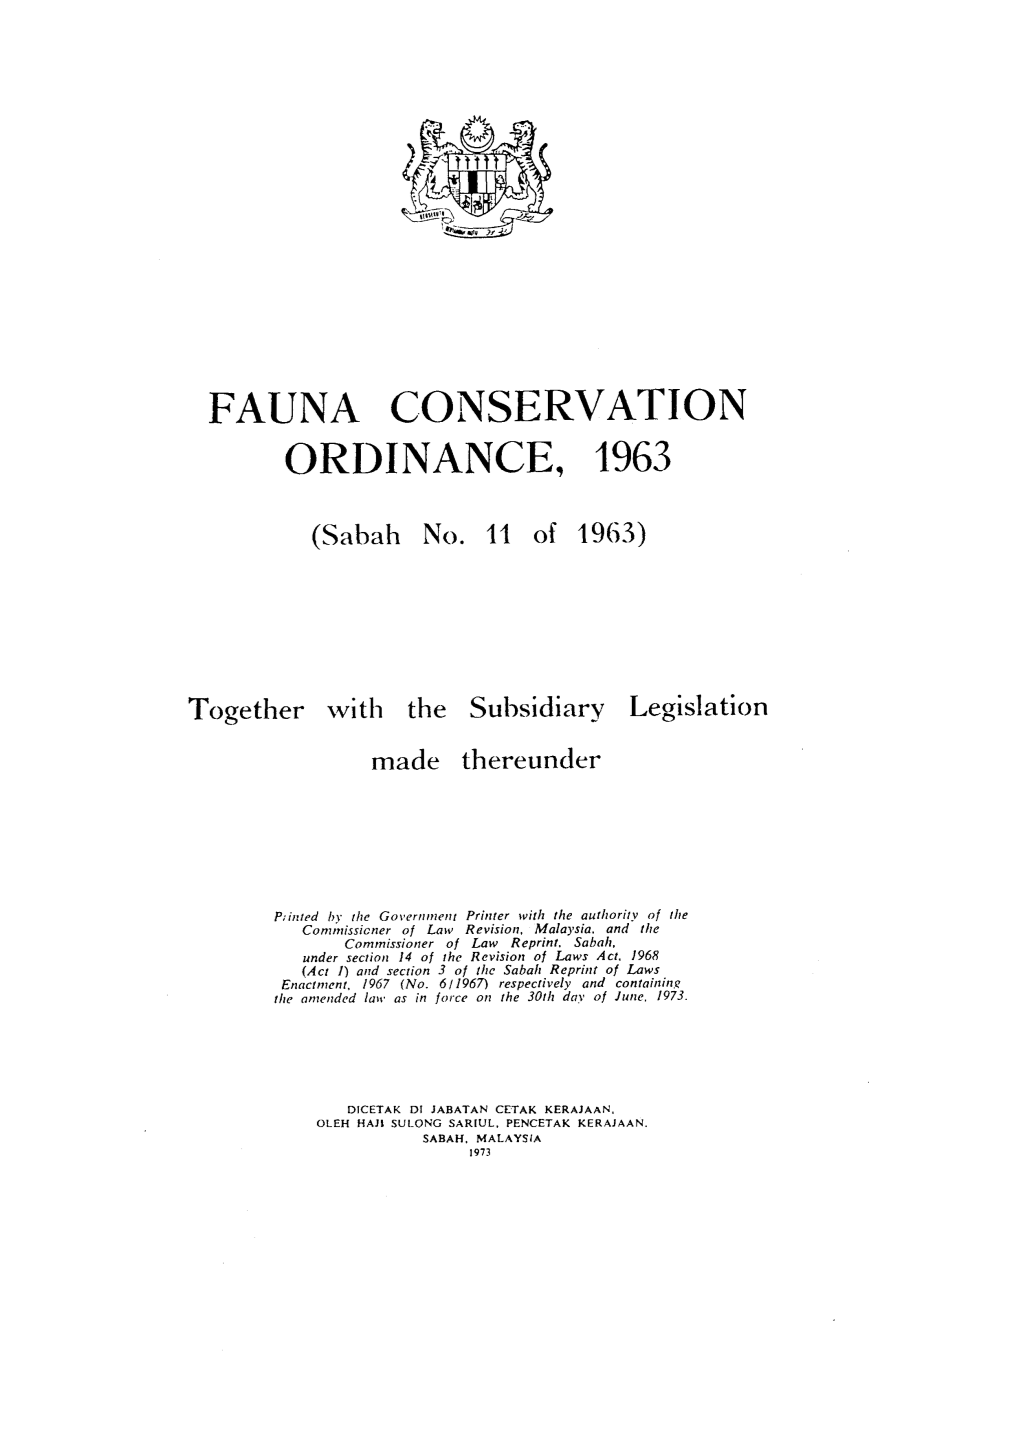 Fauna Conservation Ordinance, 1963